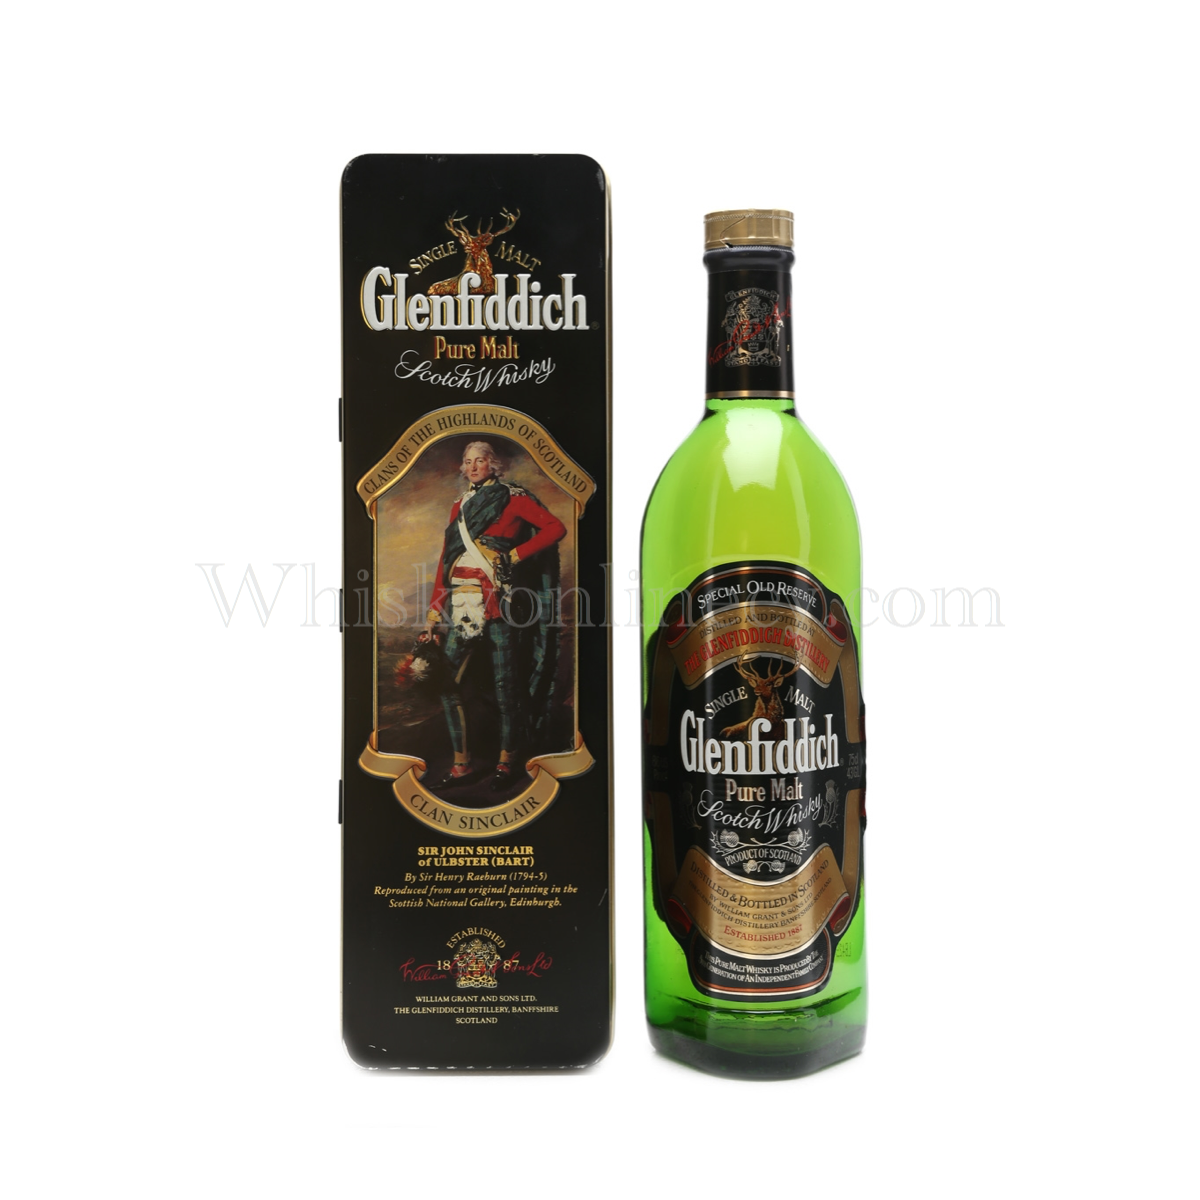 Glenfiddich Vintage Tin-Glenfiddich Scotch Whisky-Clans of the Highlands of Scotland 